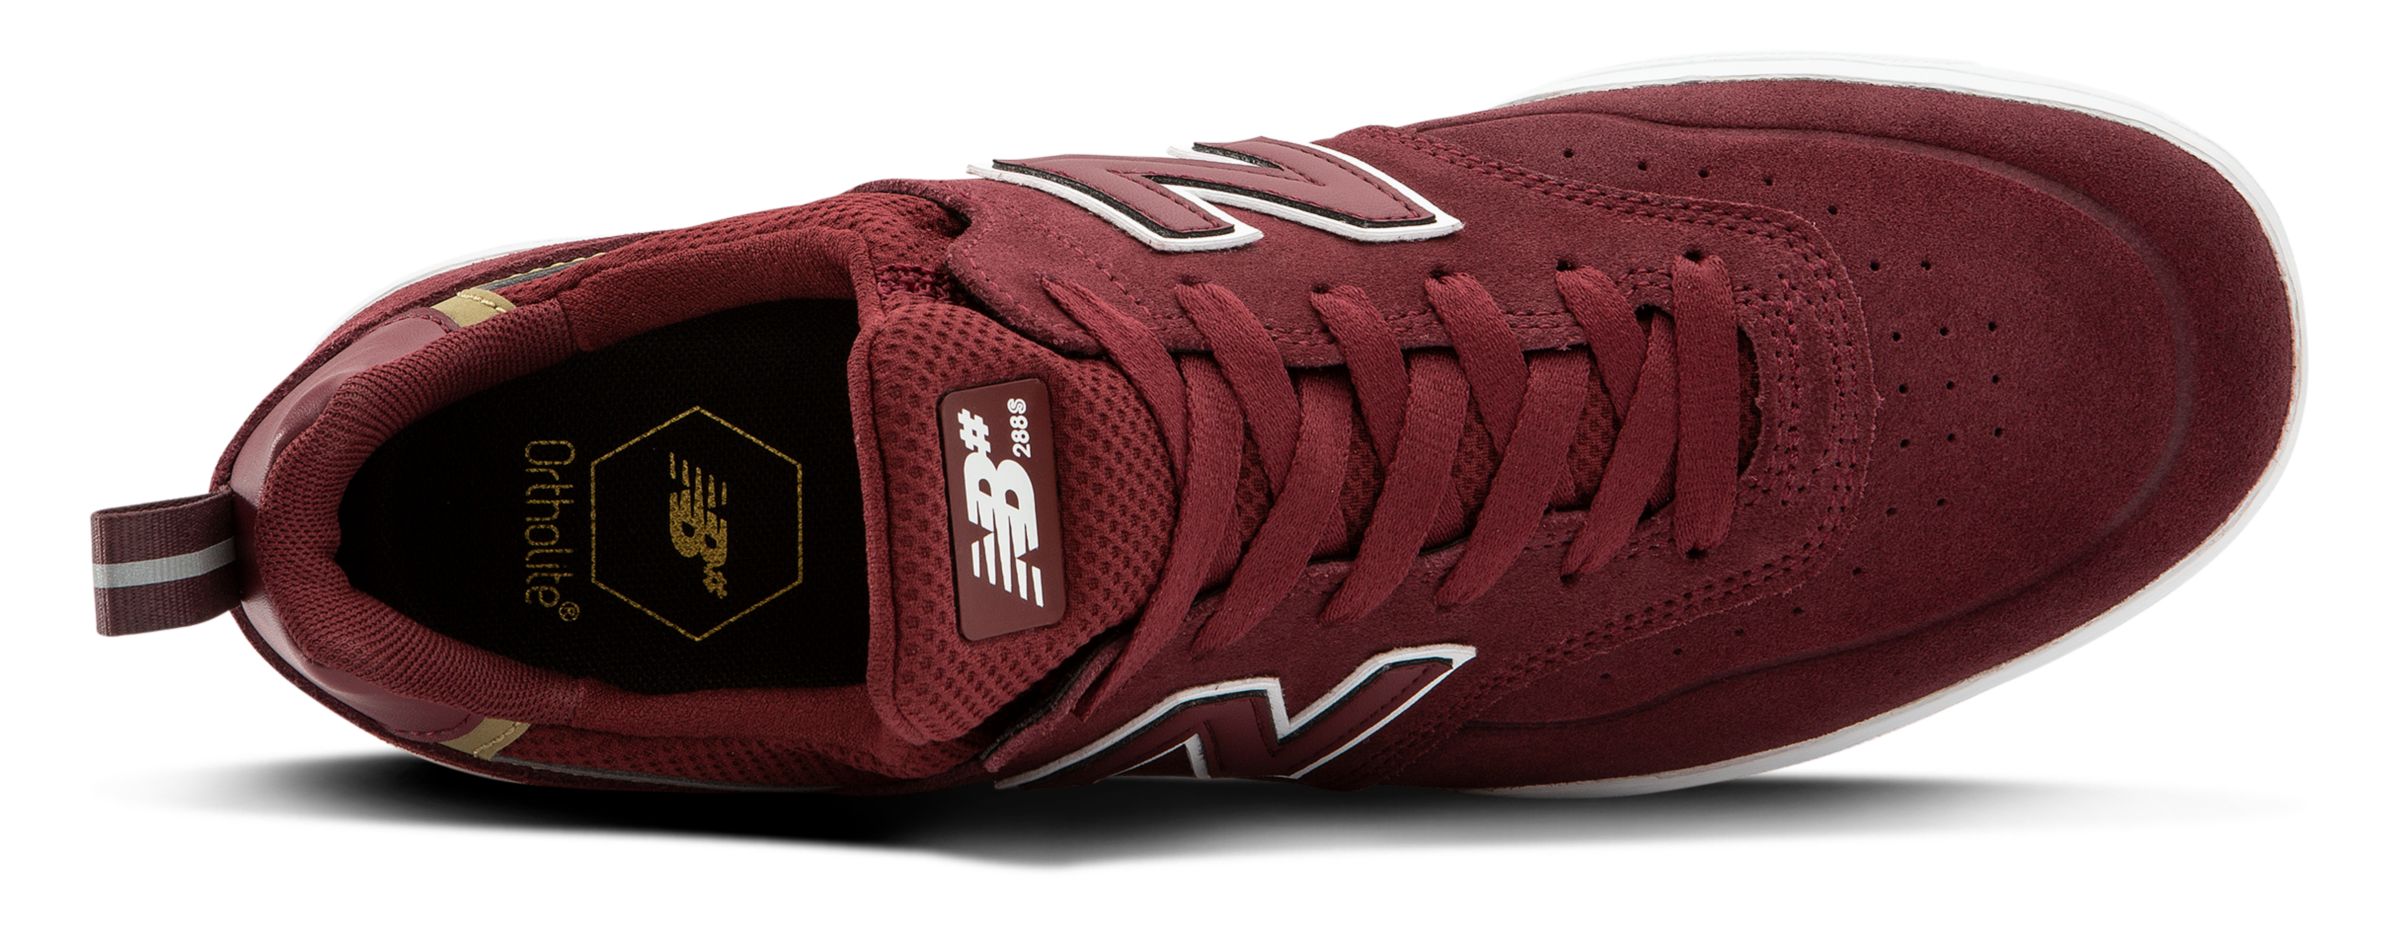 Men's Numeric NM288 Sport Lifestyle Shoes - New Balance